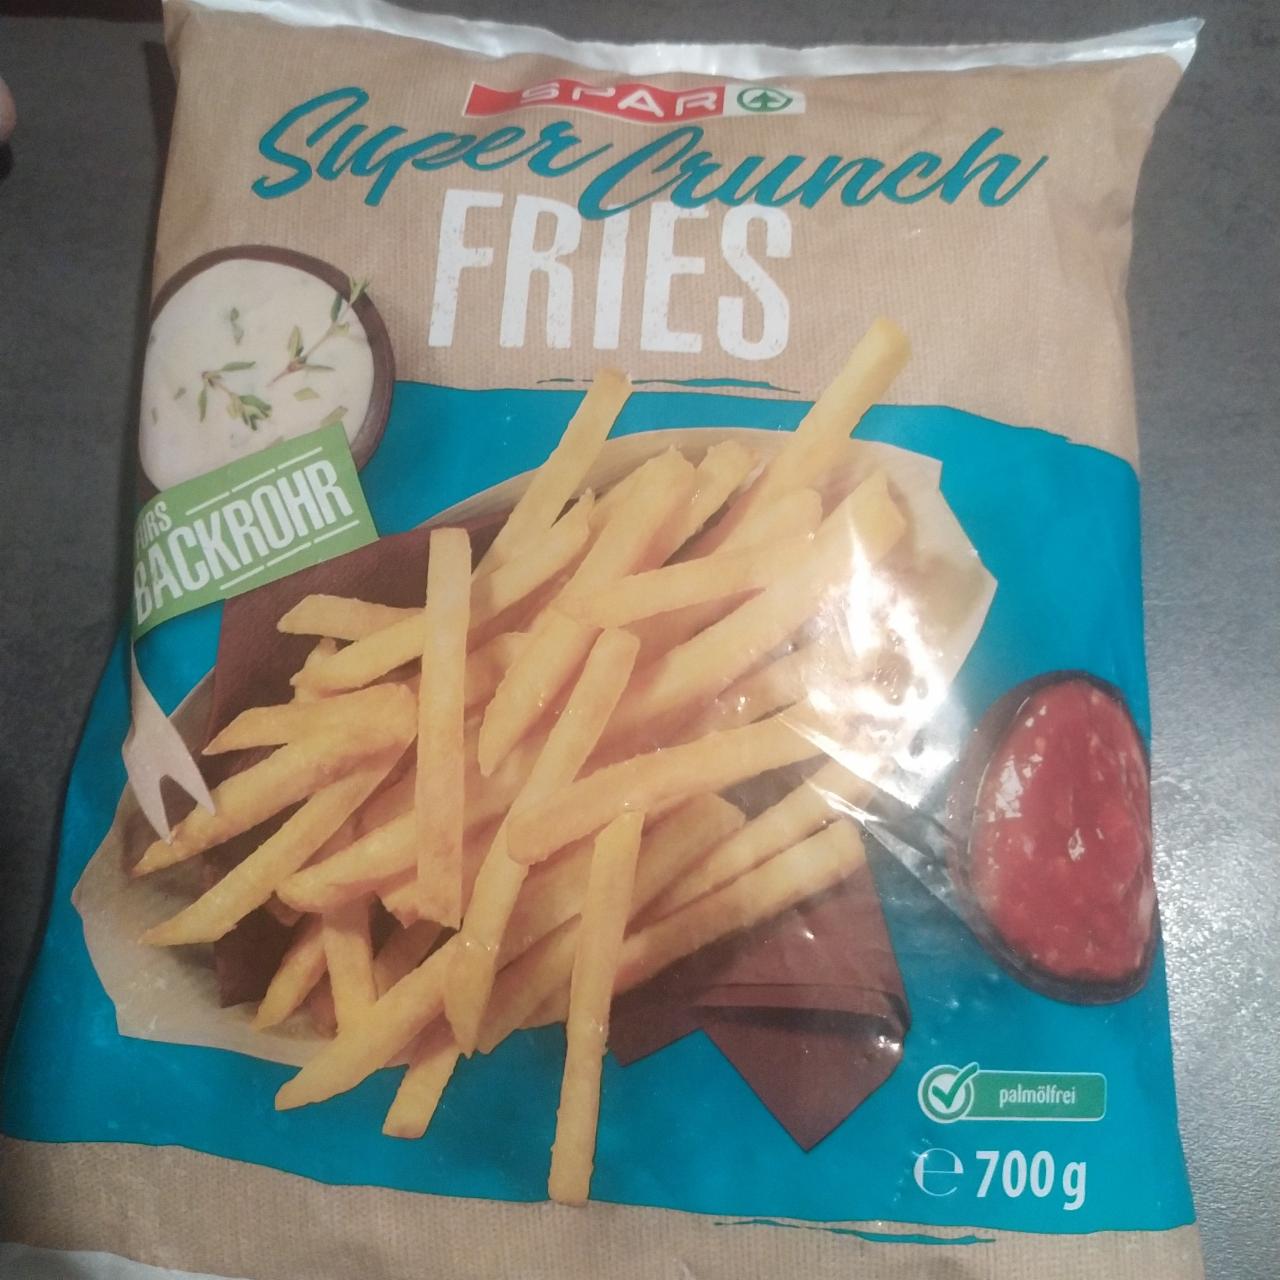 Fotografie - Super Crunch Fries Spar